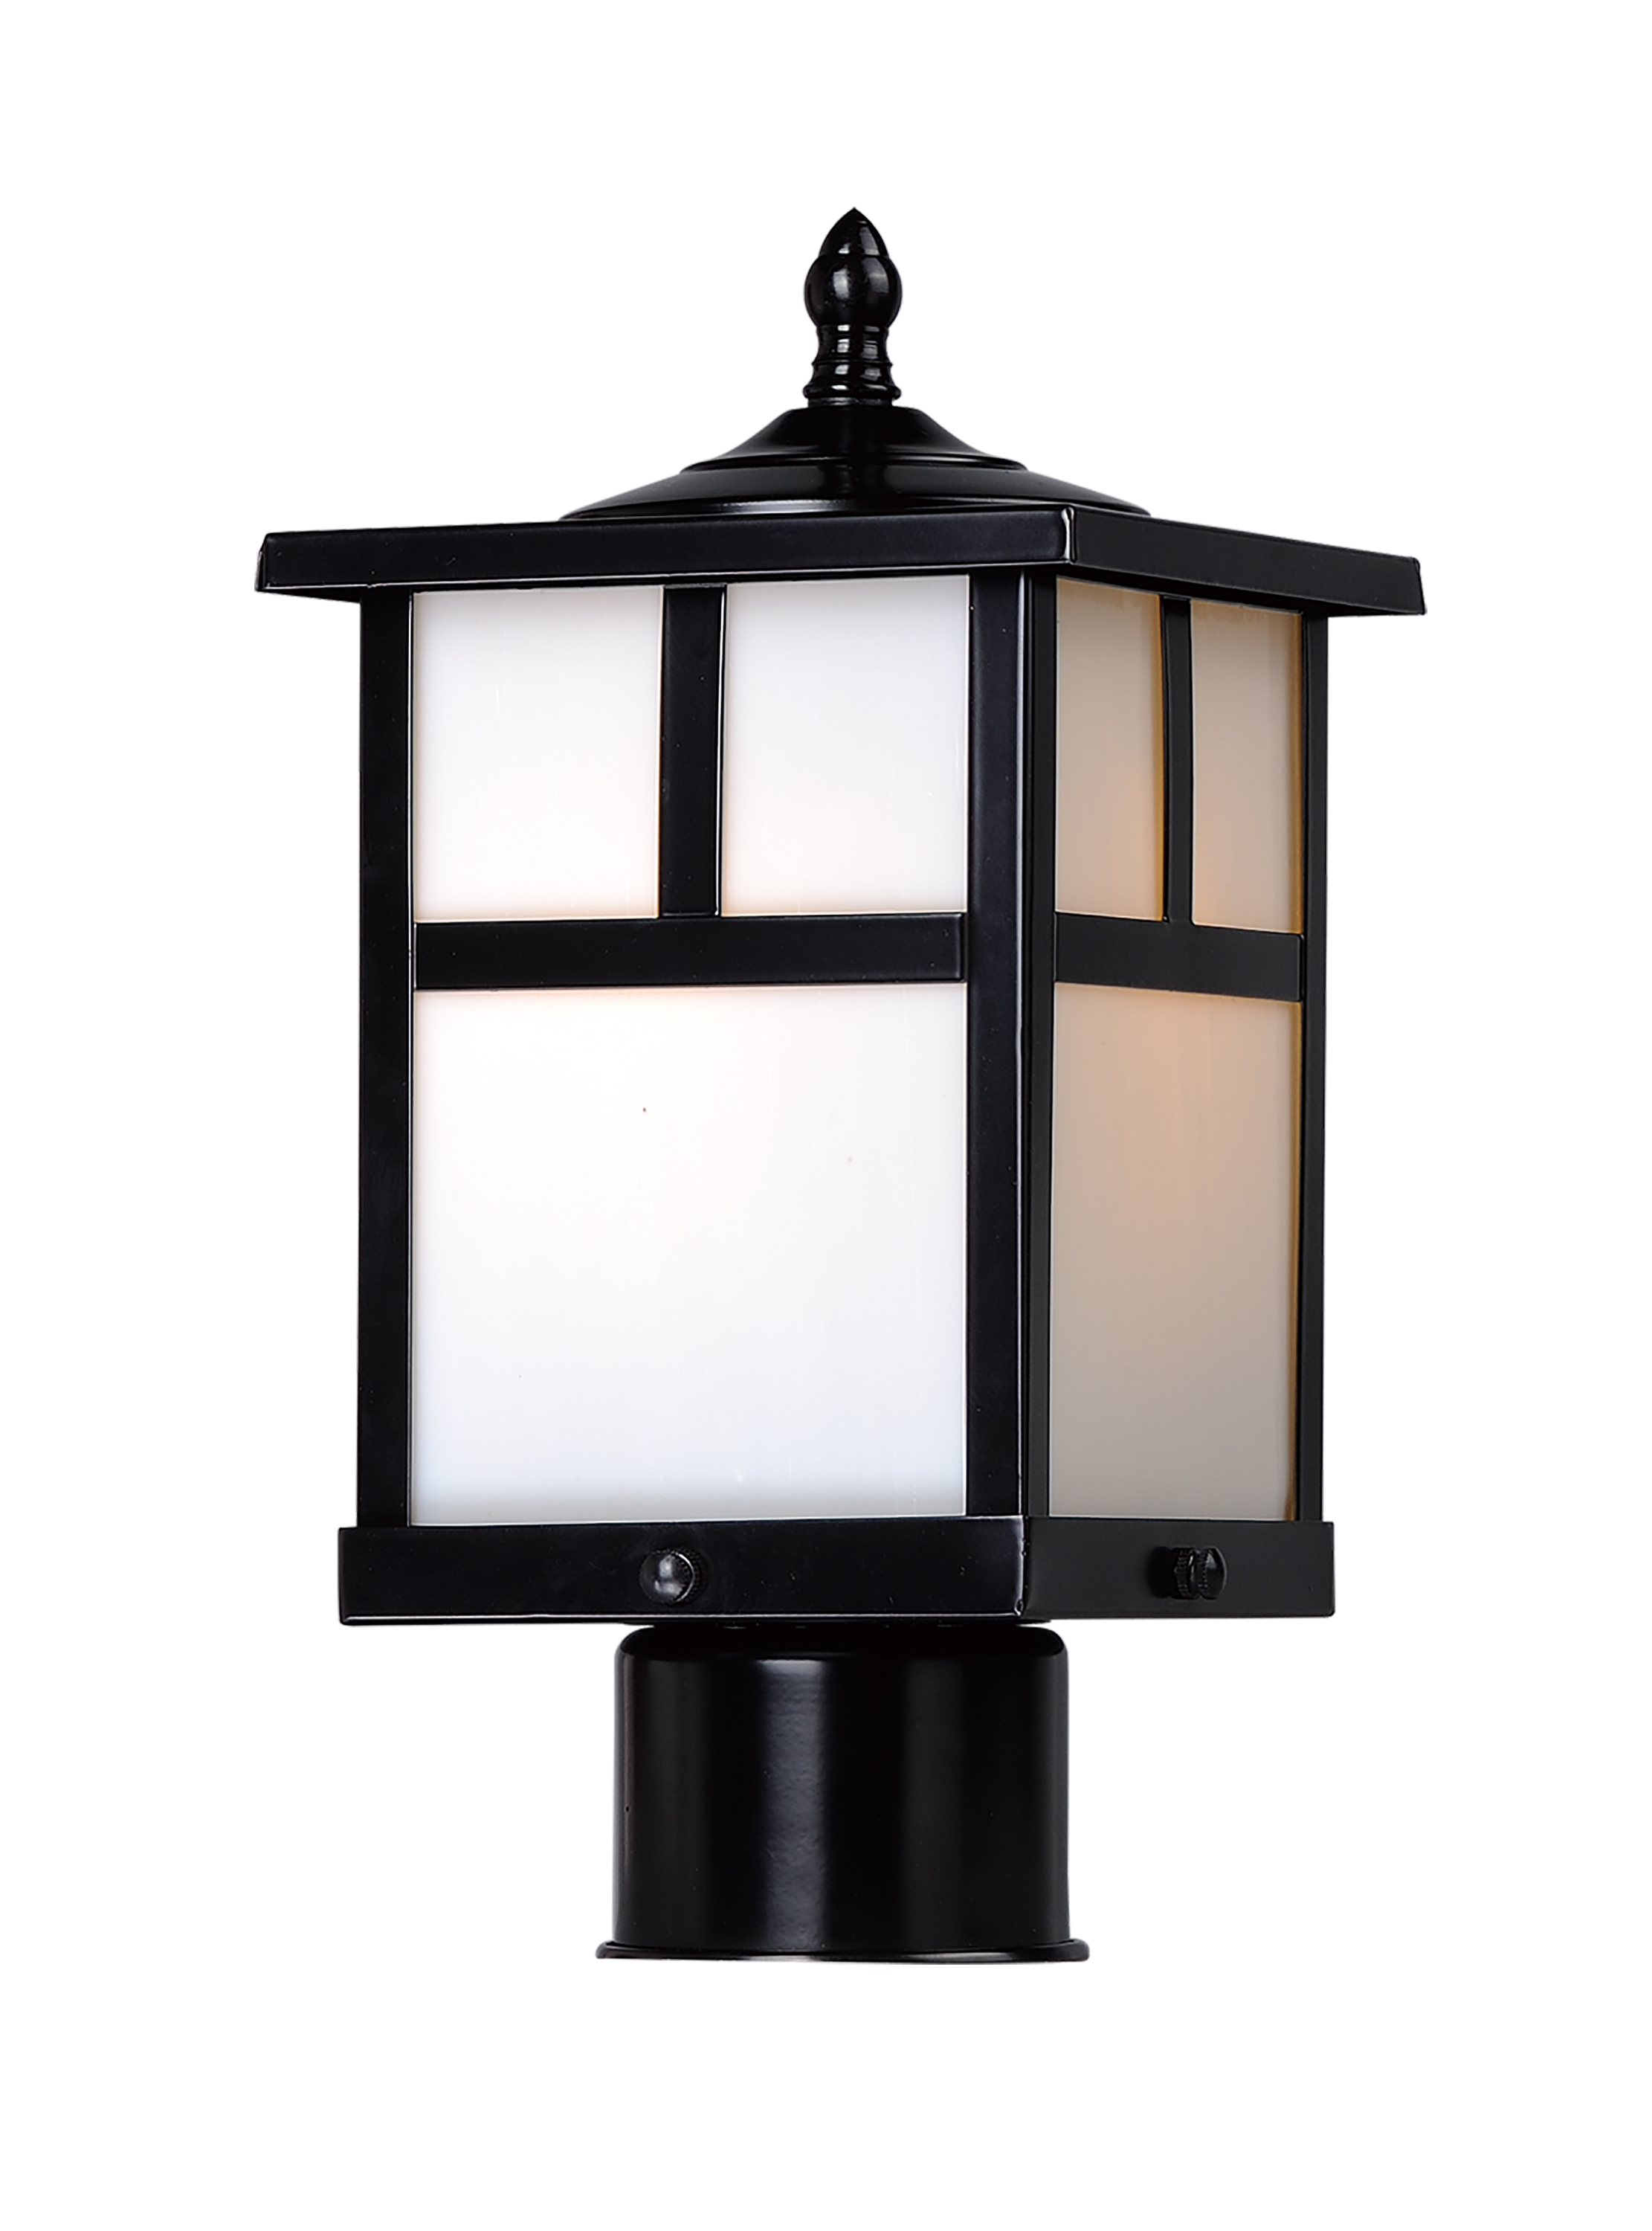 Outdoor Post Light By Maxim Lighting, Outdoor Post Light Fixtures White